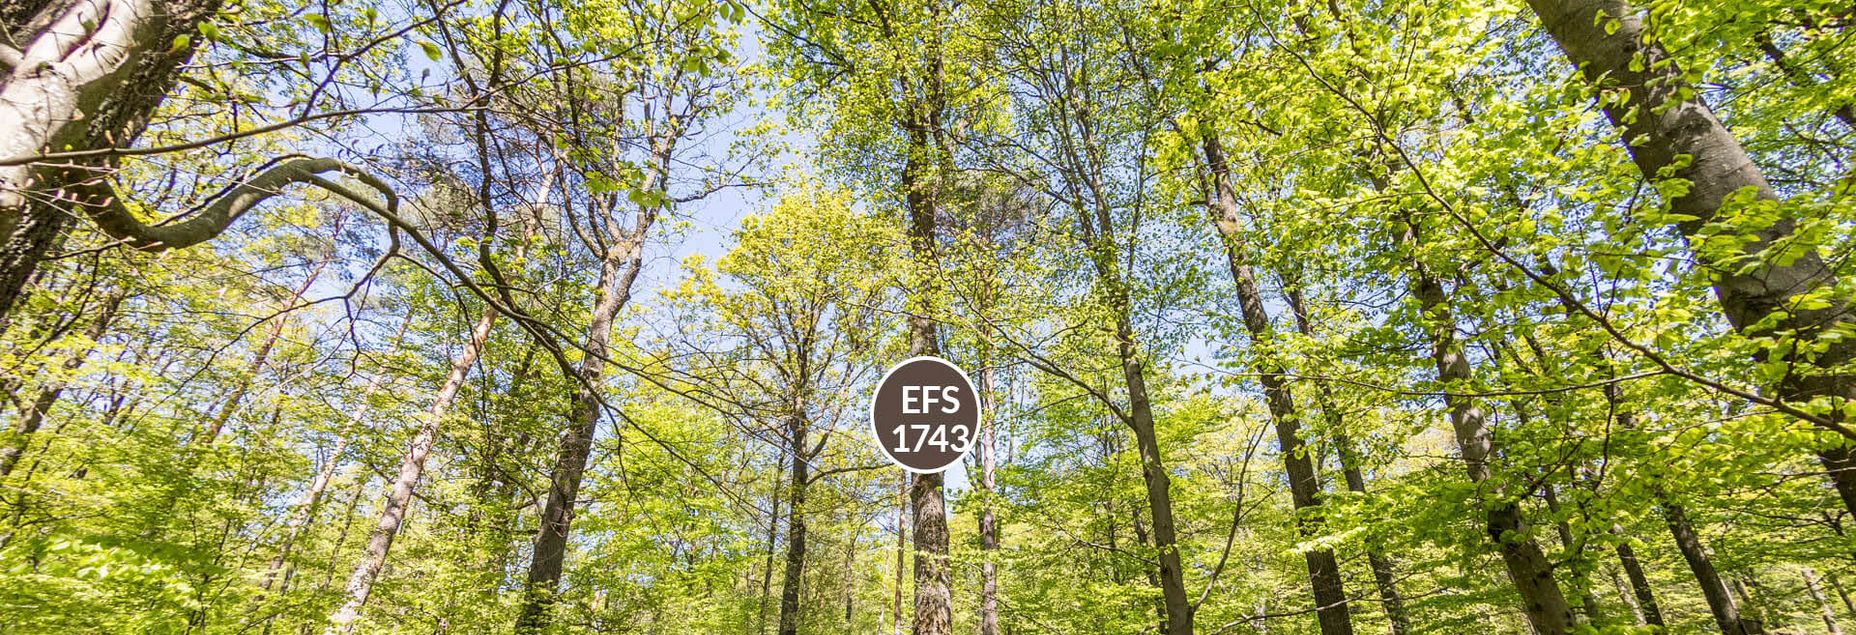 Baum EFS 1743 - Fisheyeperspektive